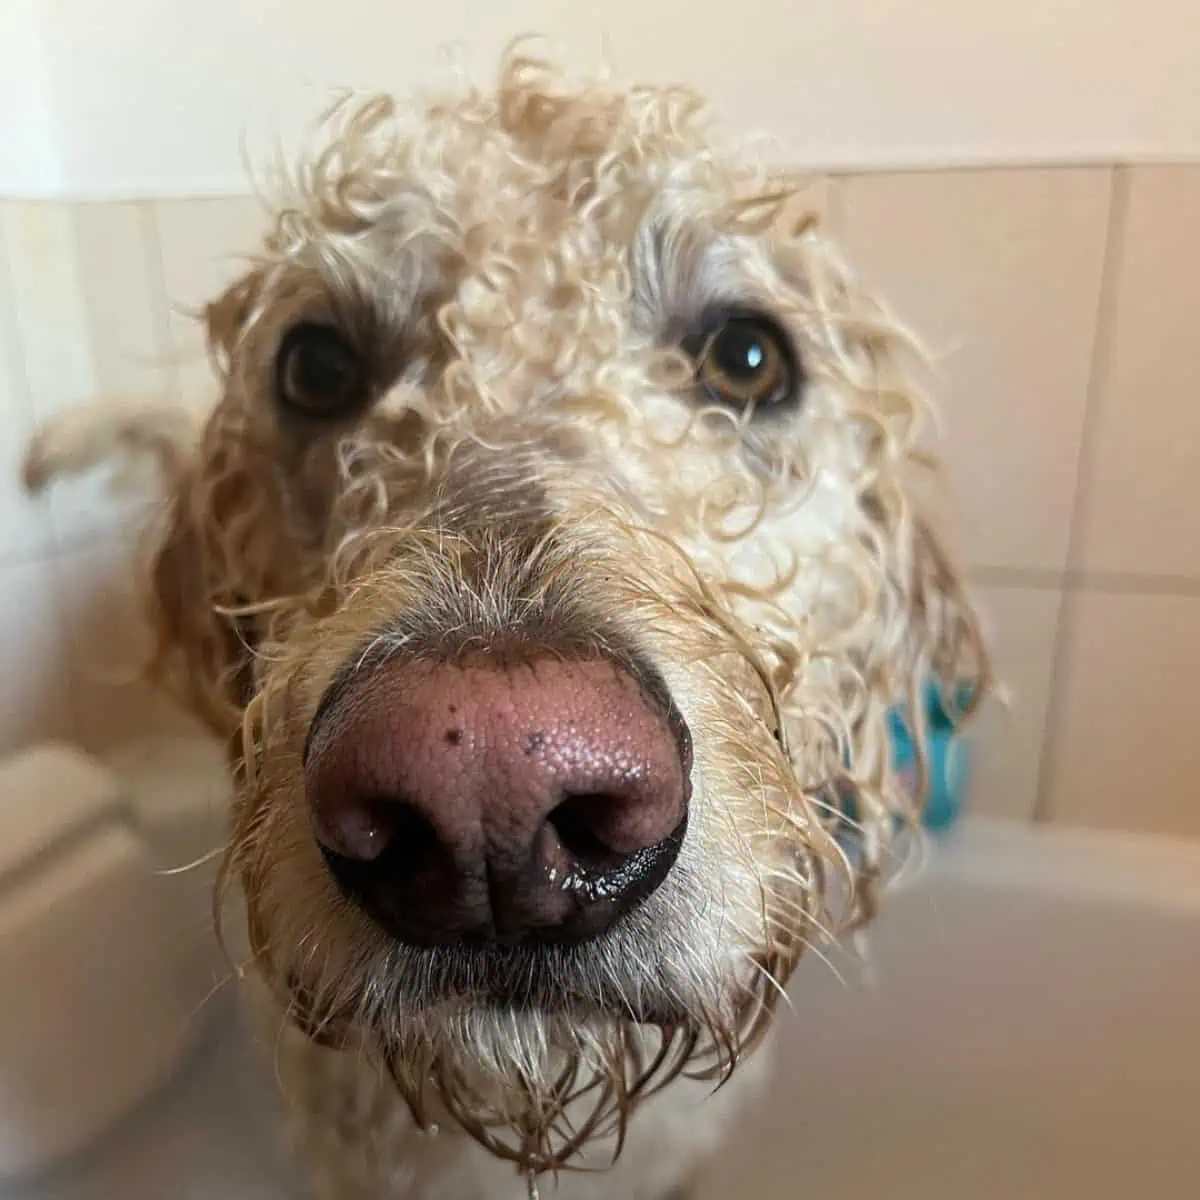 muddy Labradoodle needs a bath